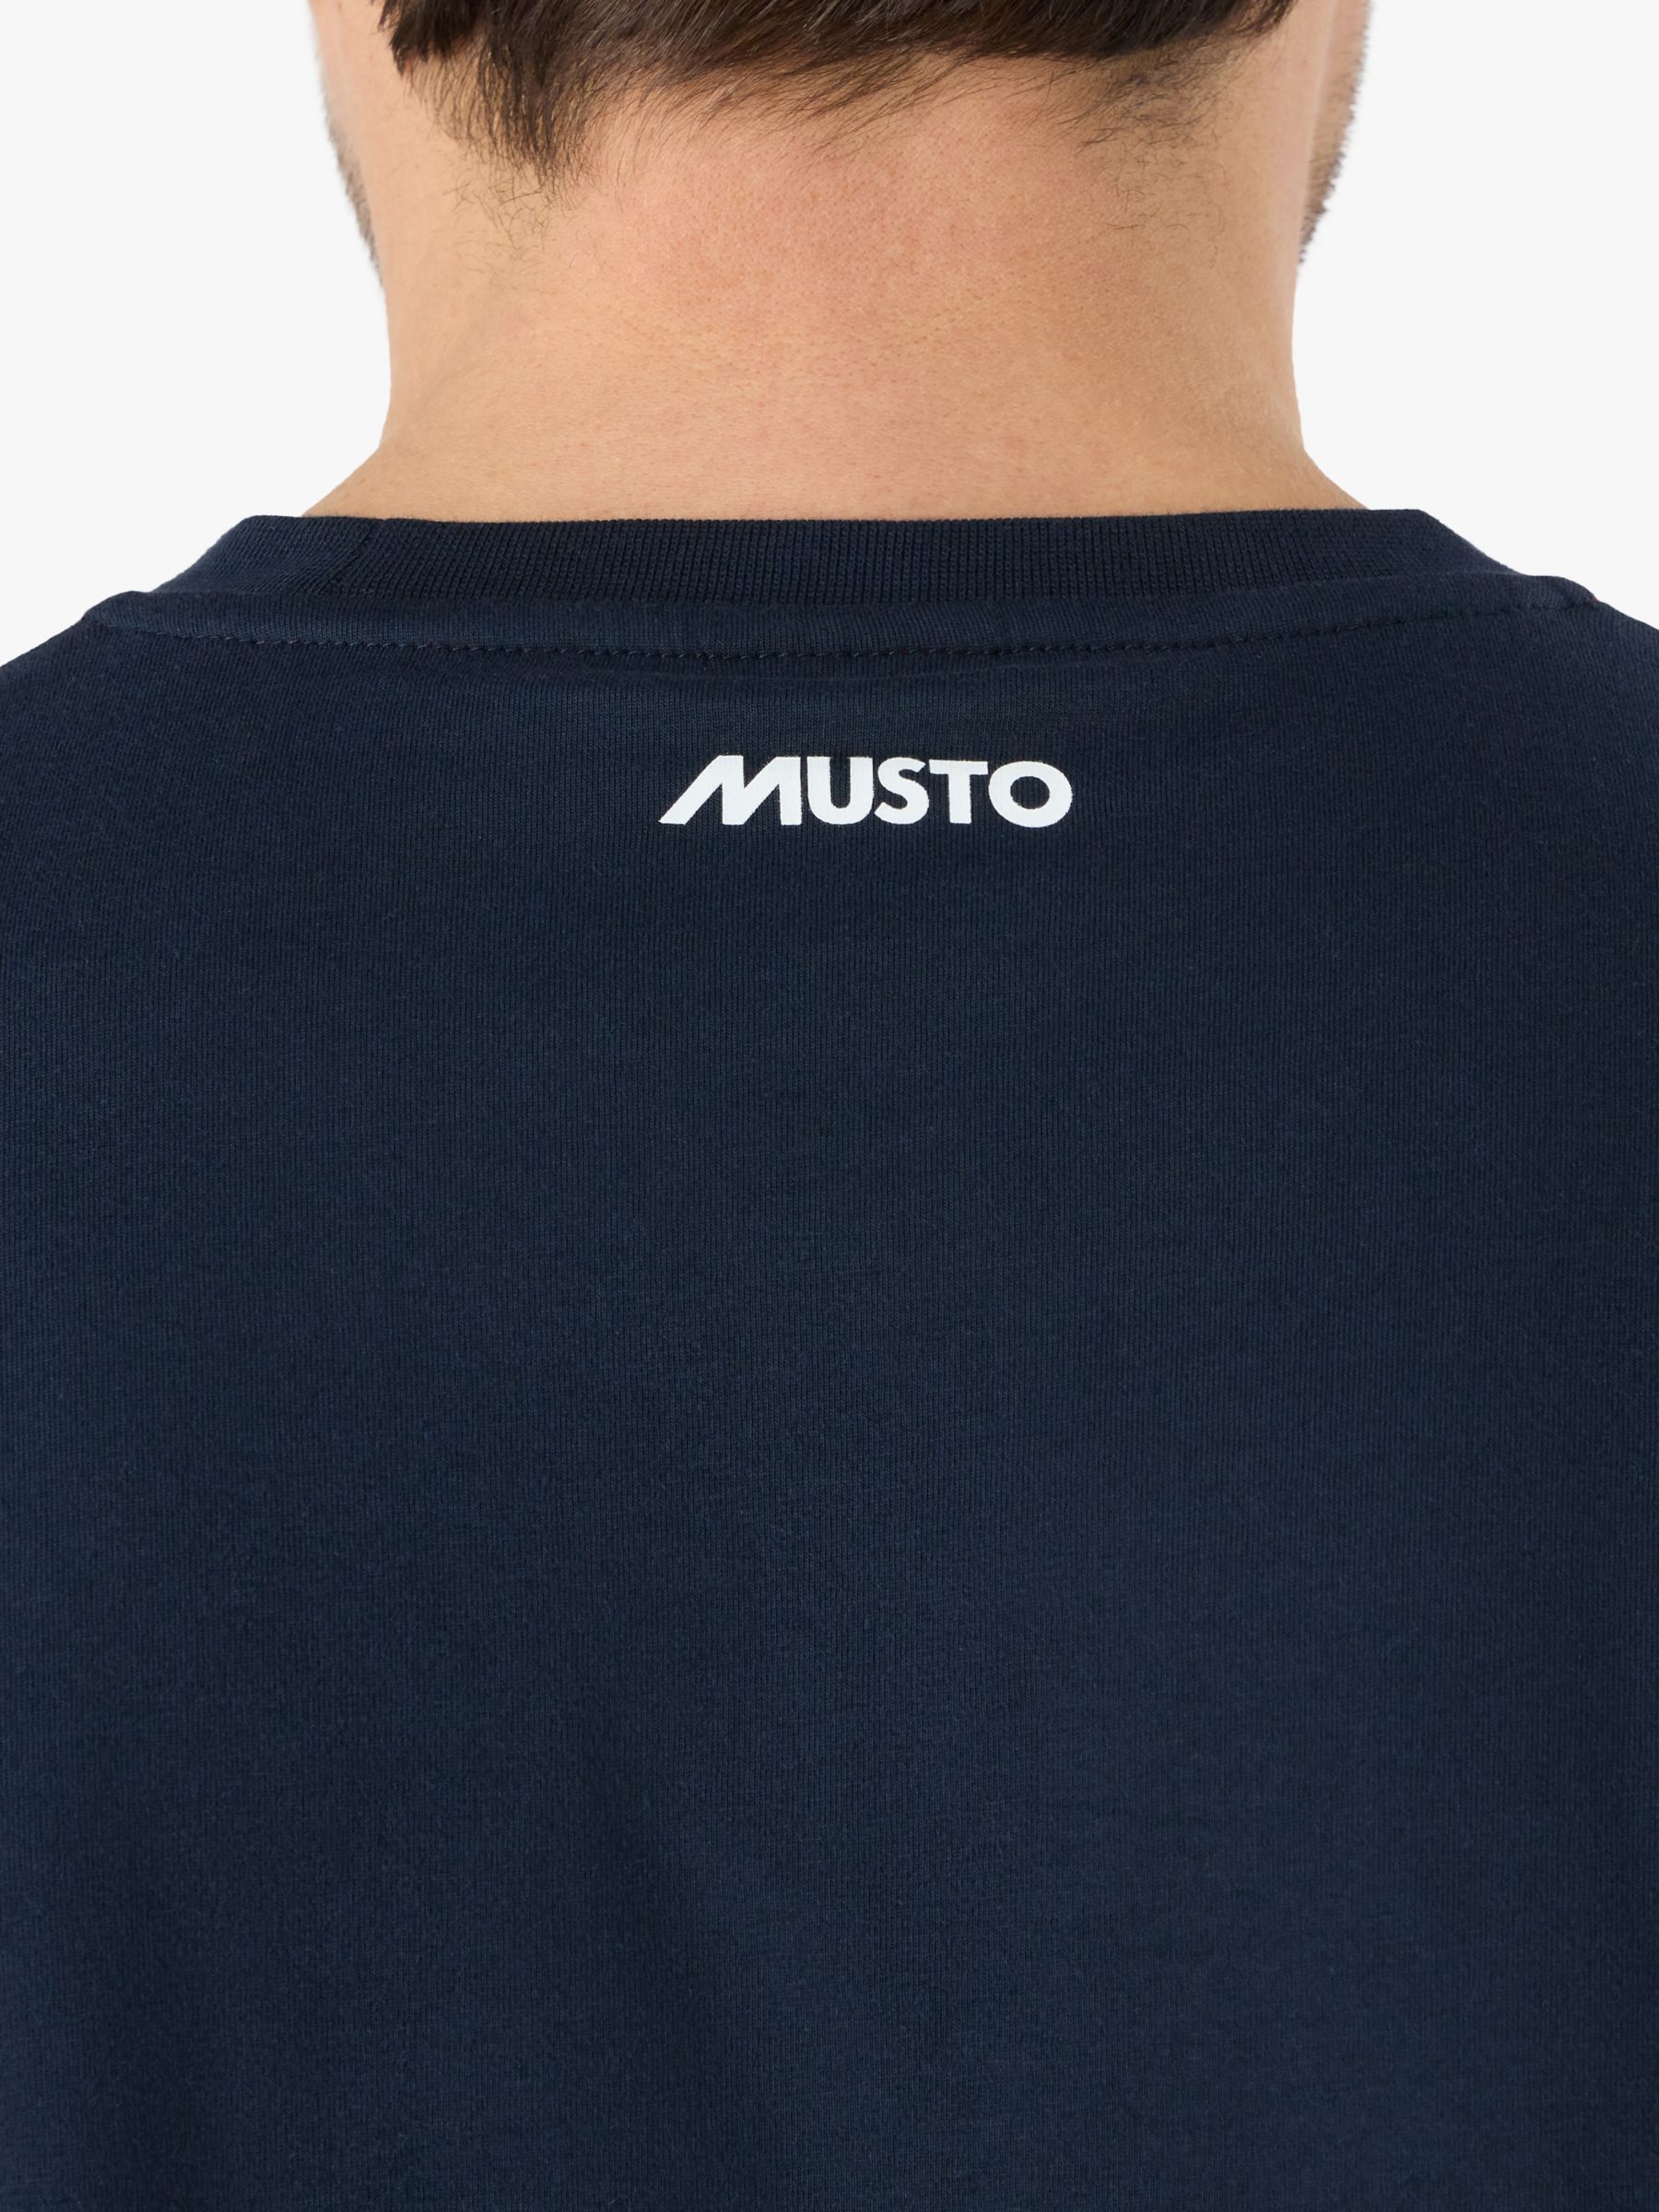 Musto 60th Anniversary Logo Short Sleeve T-Shirt, Navy, M